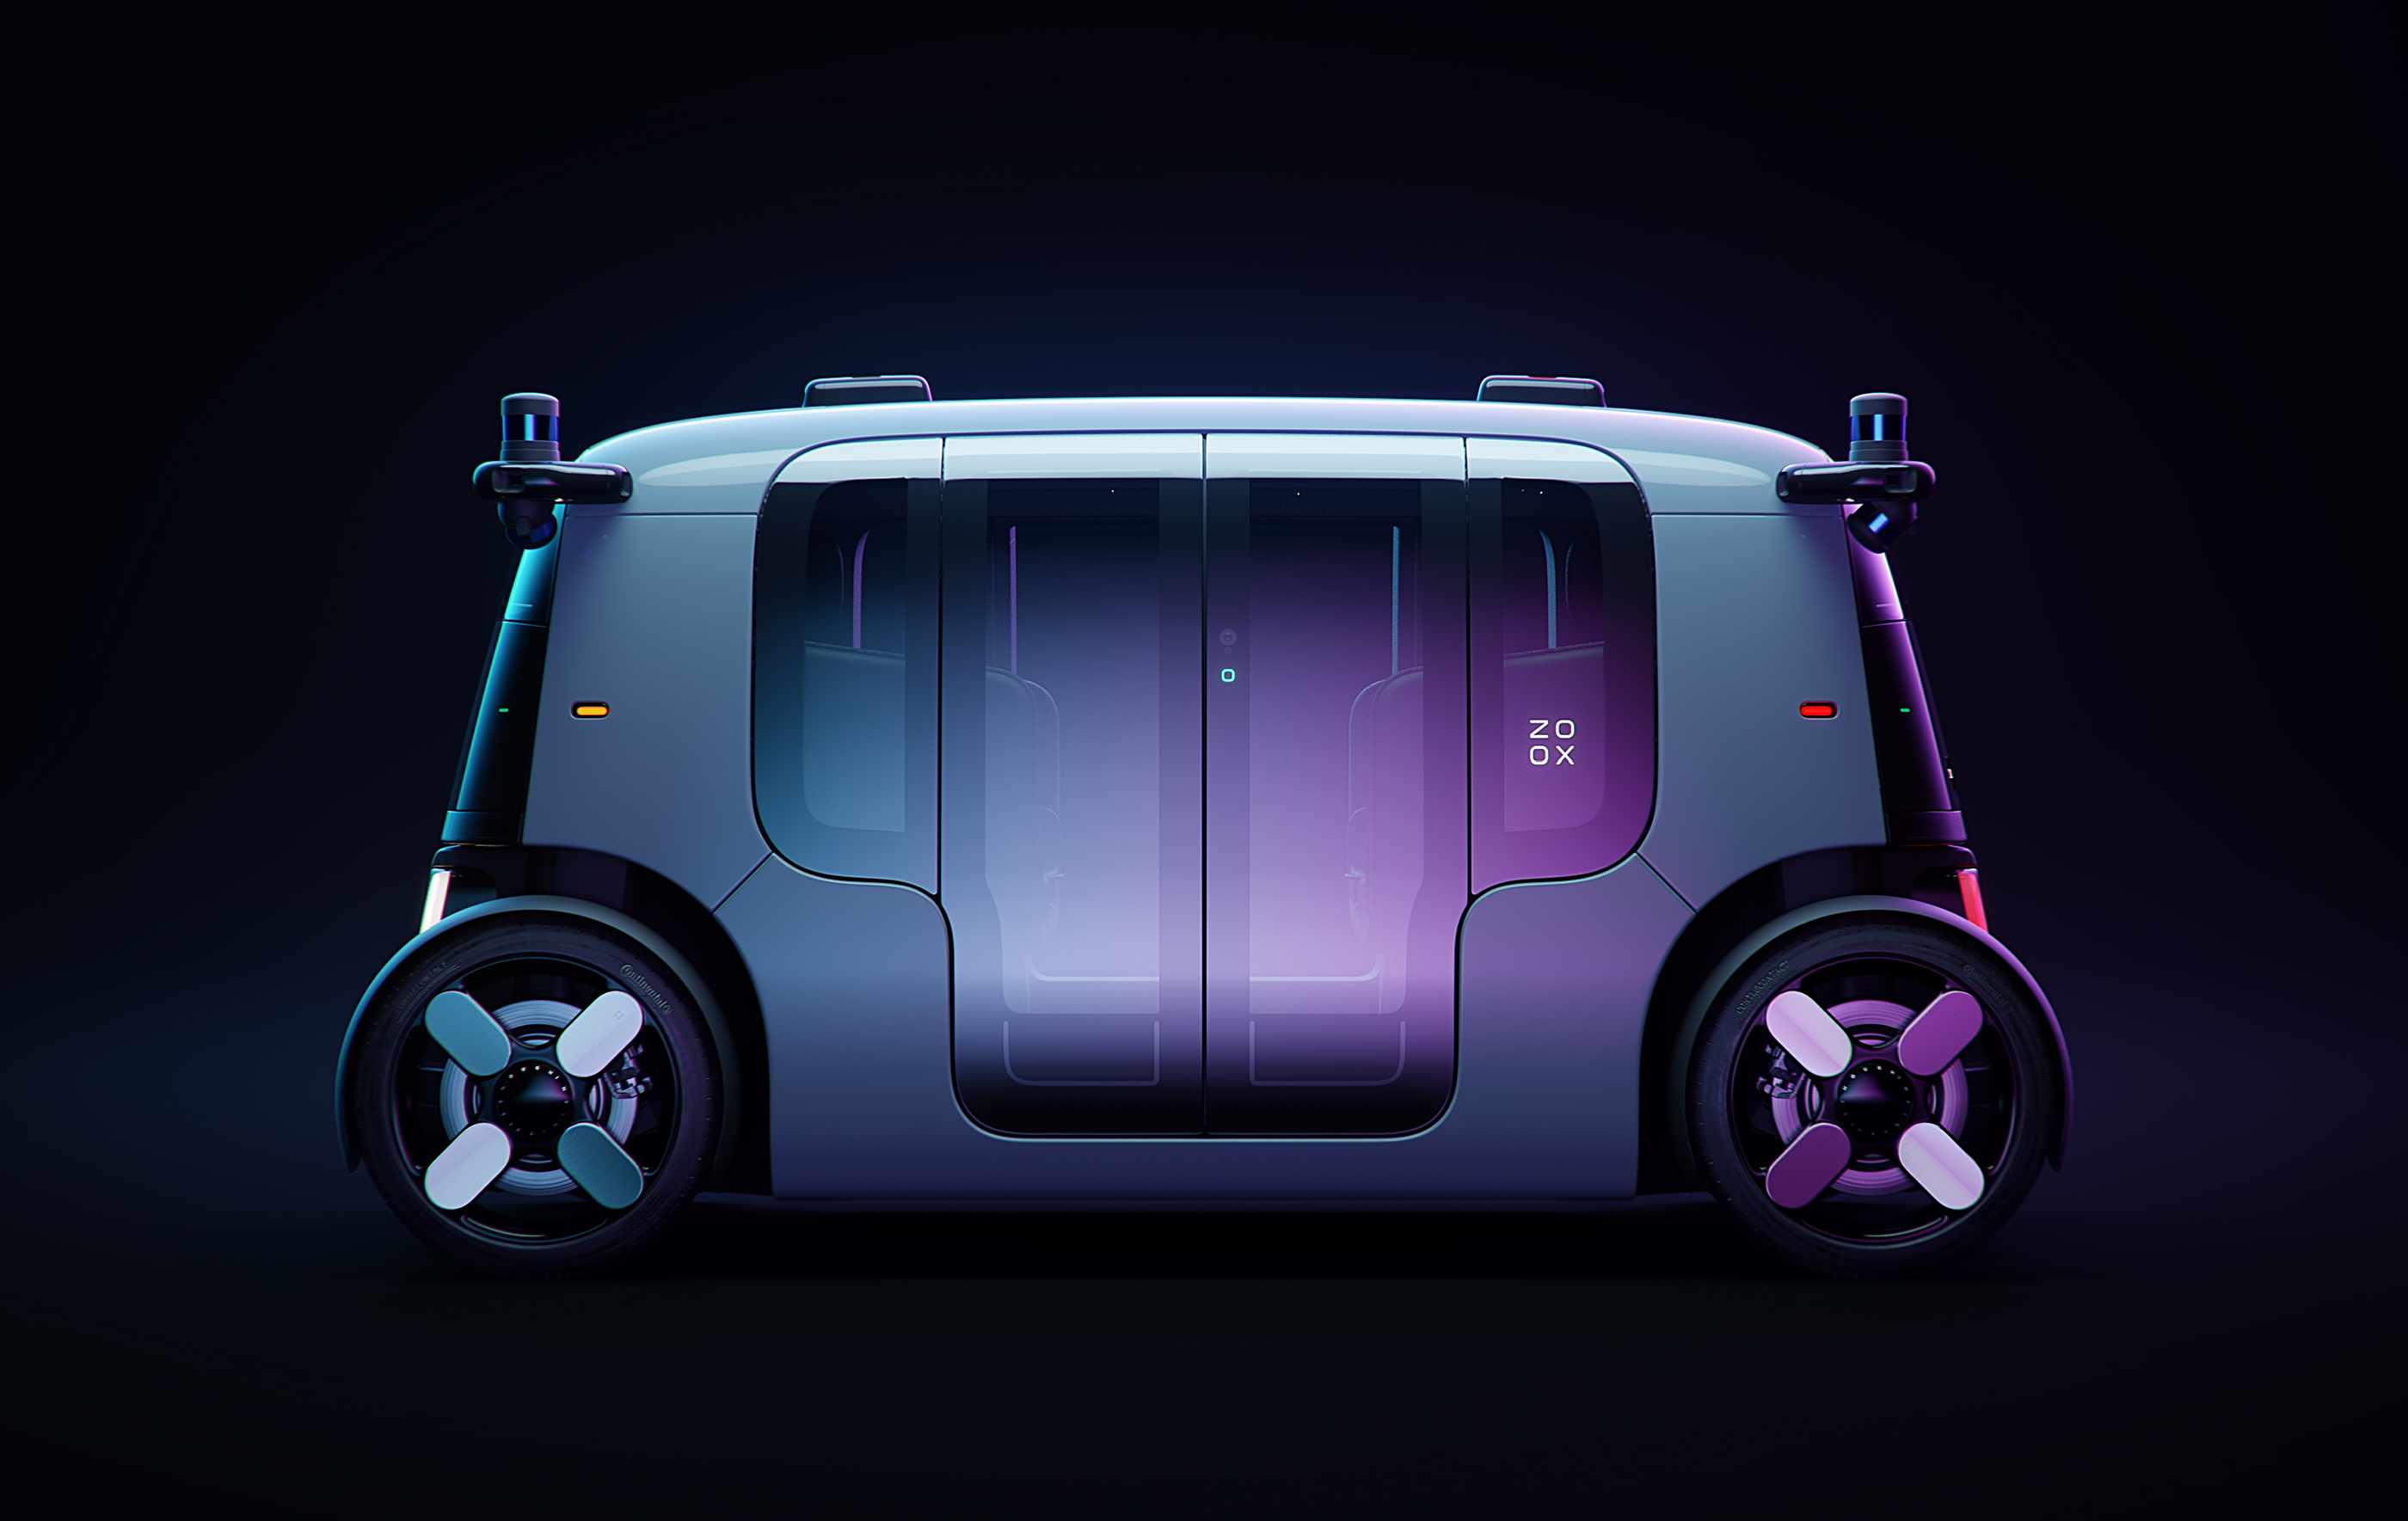 Amazon's Zoox unveils its autonomous electric vehicle with massive